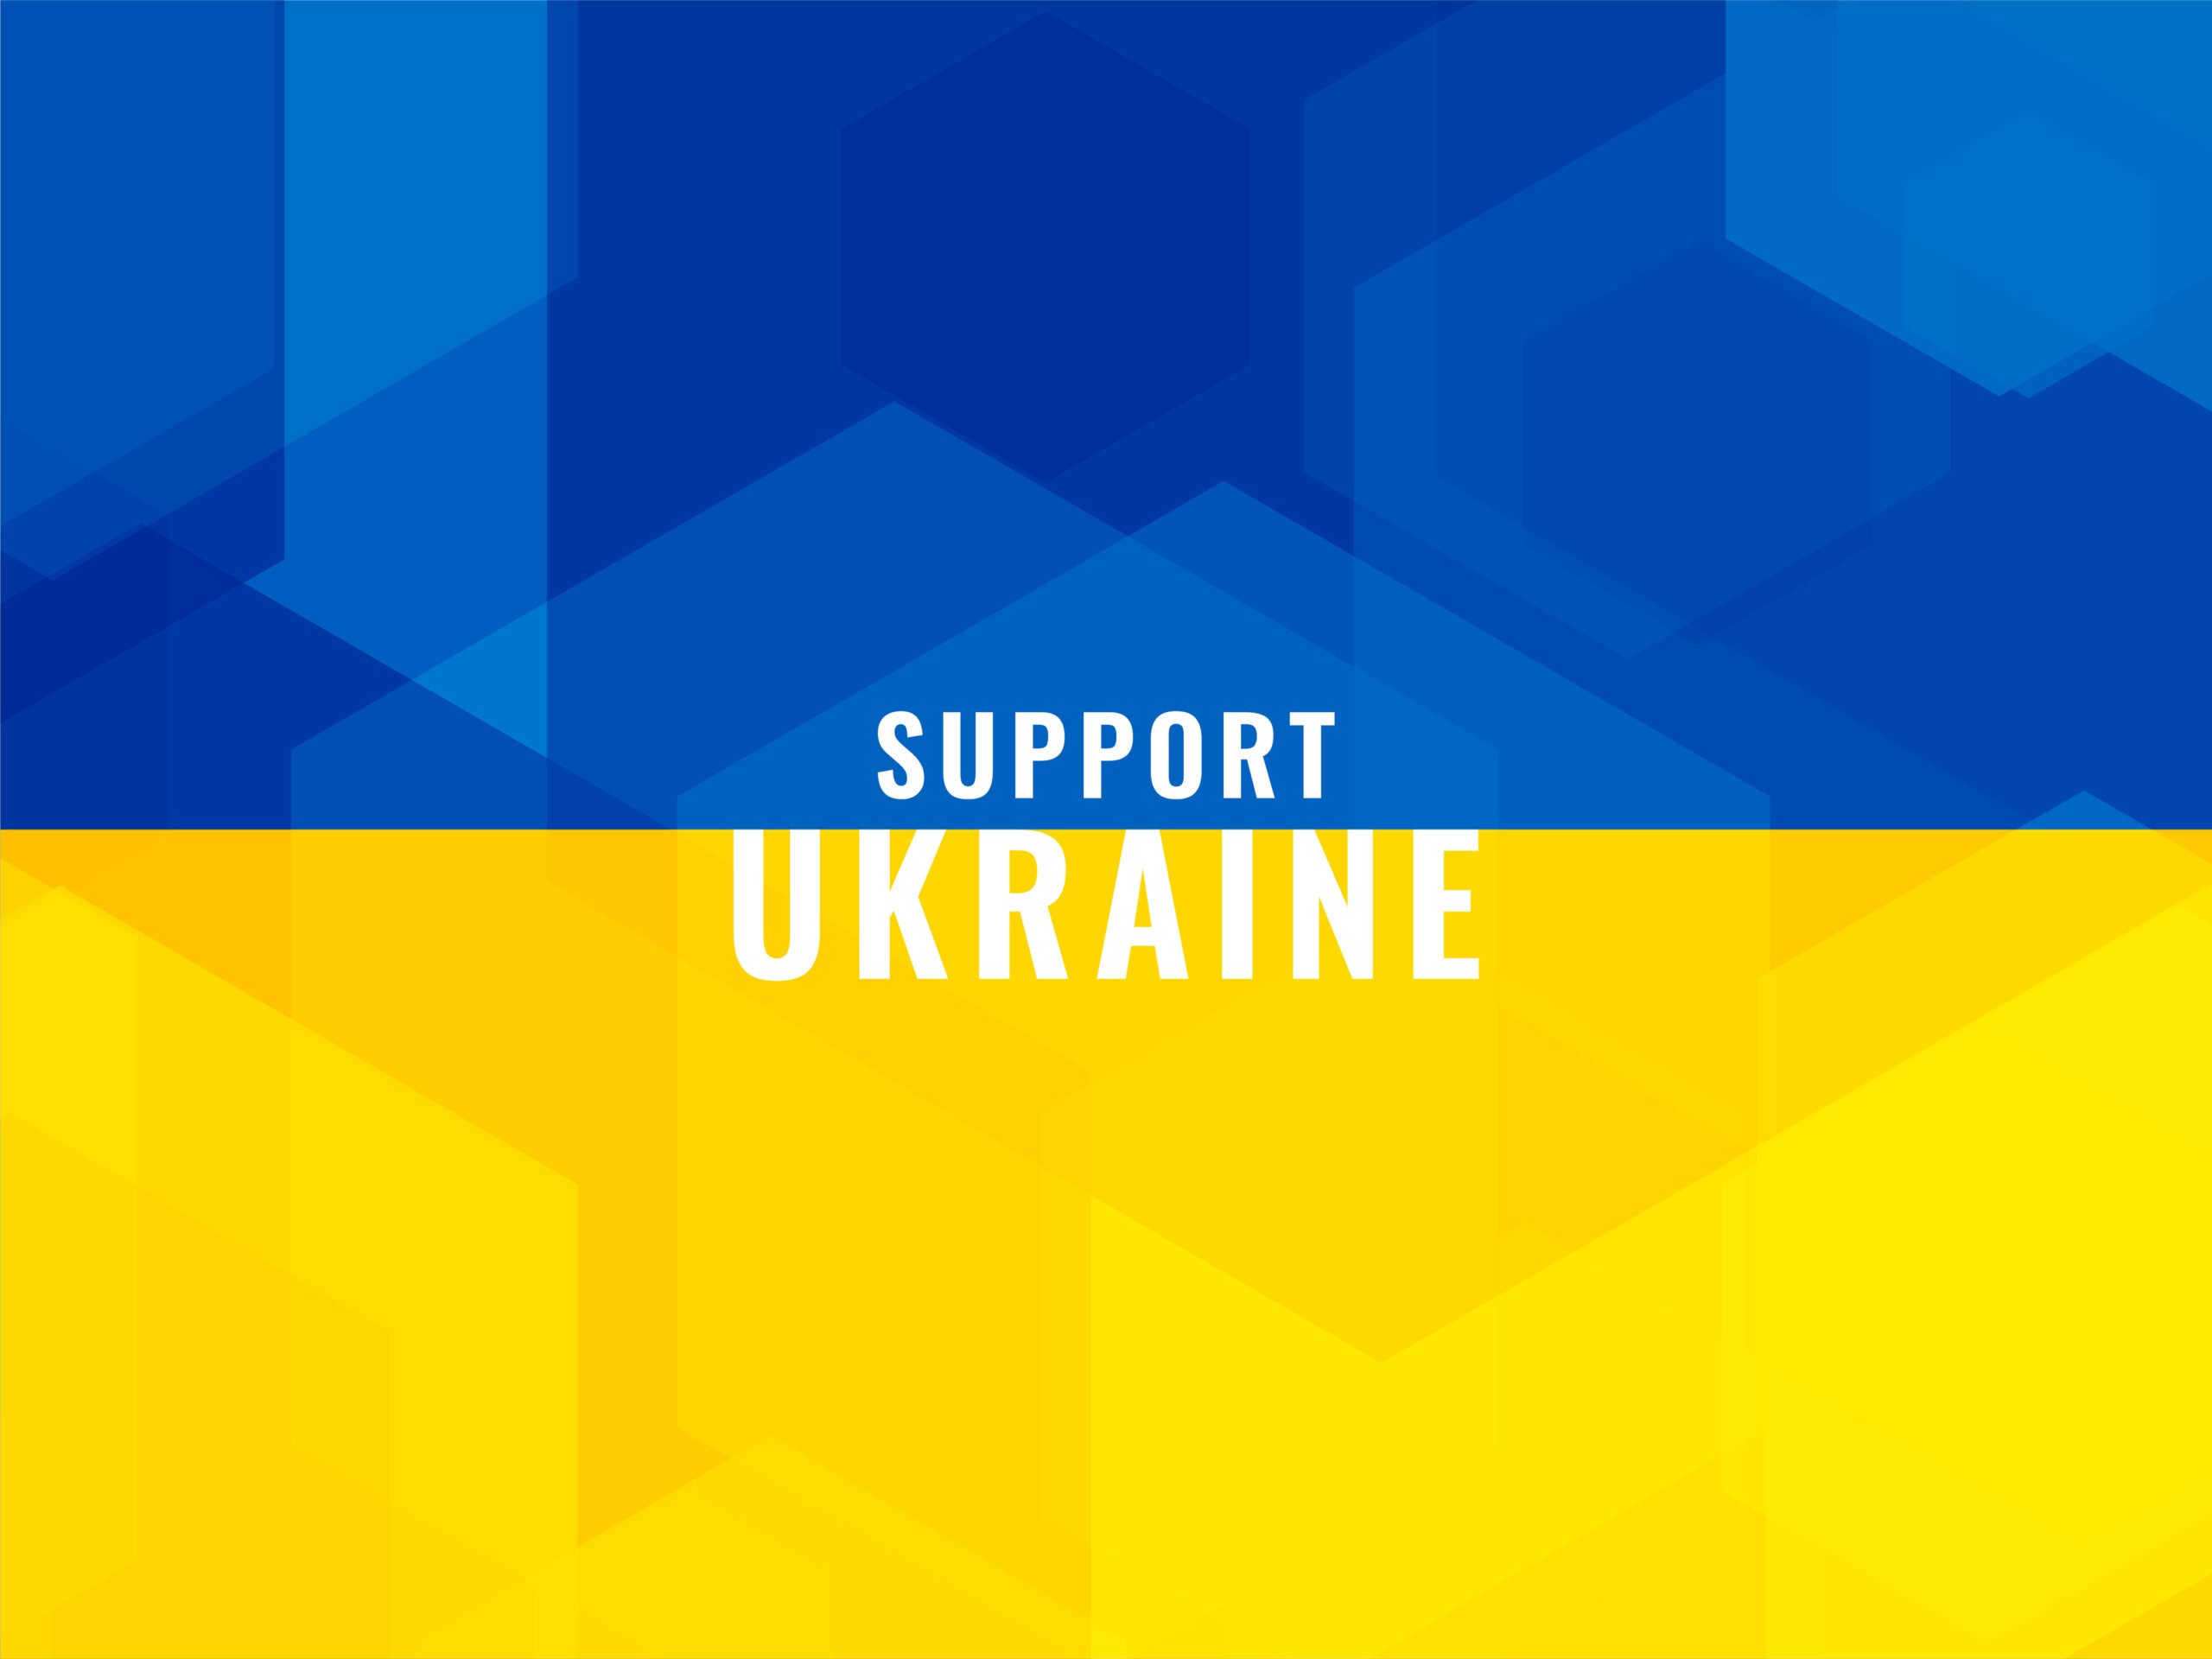 Support Ukraine text with Ukraine flag theme